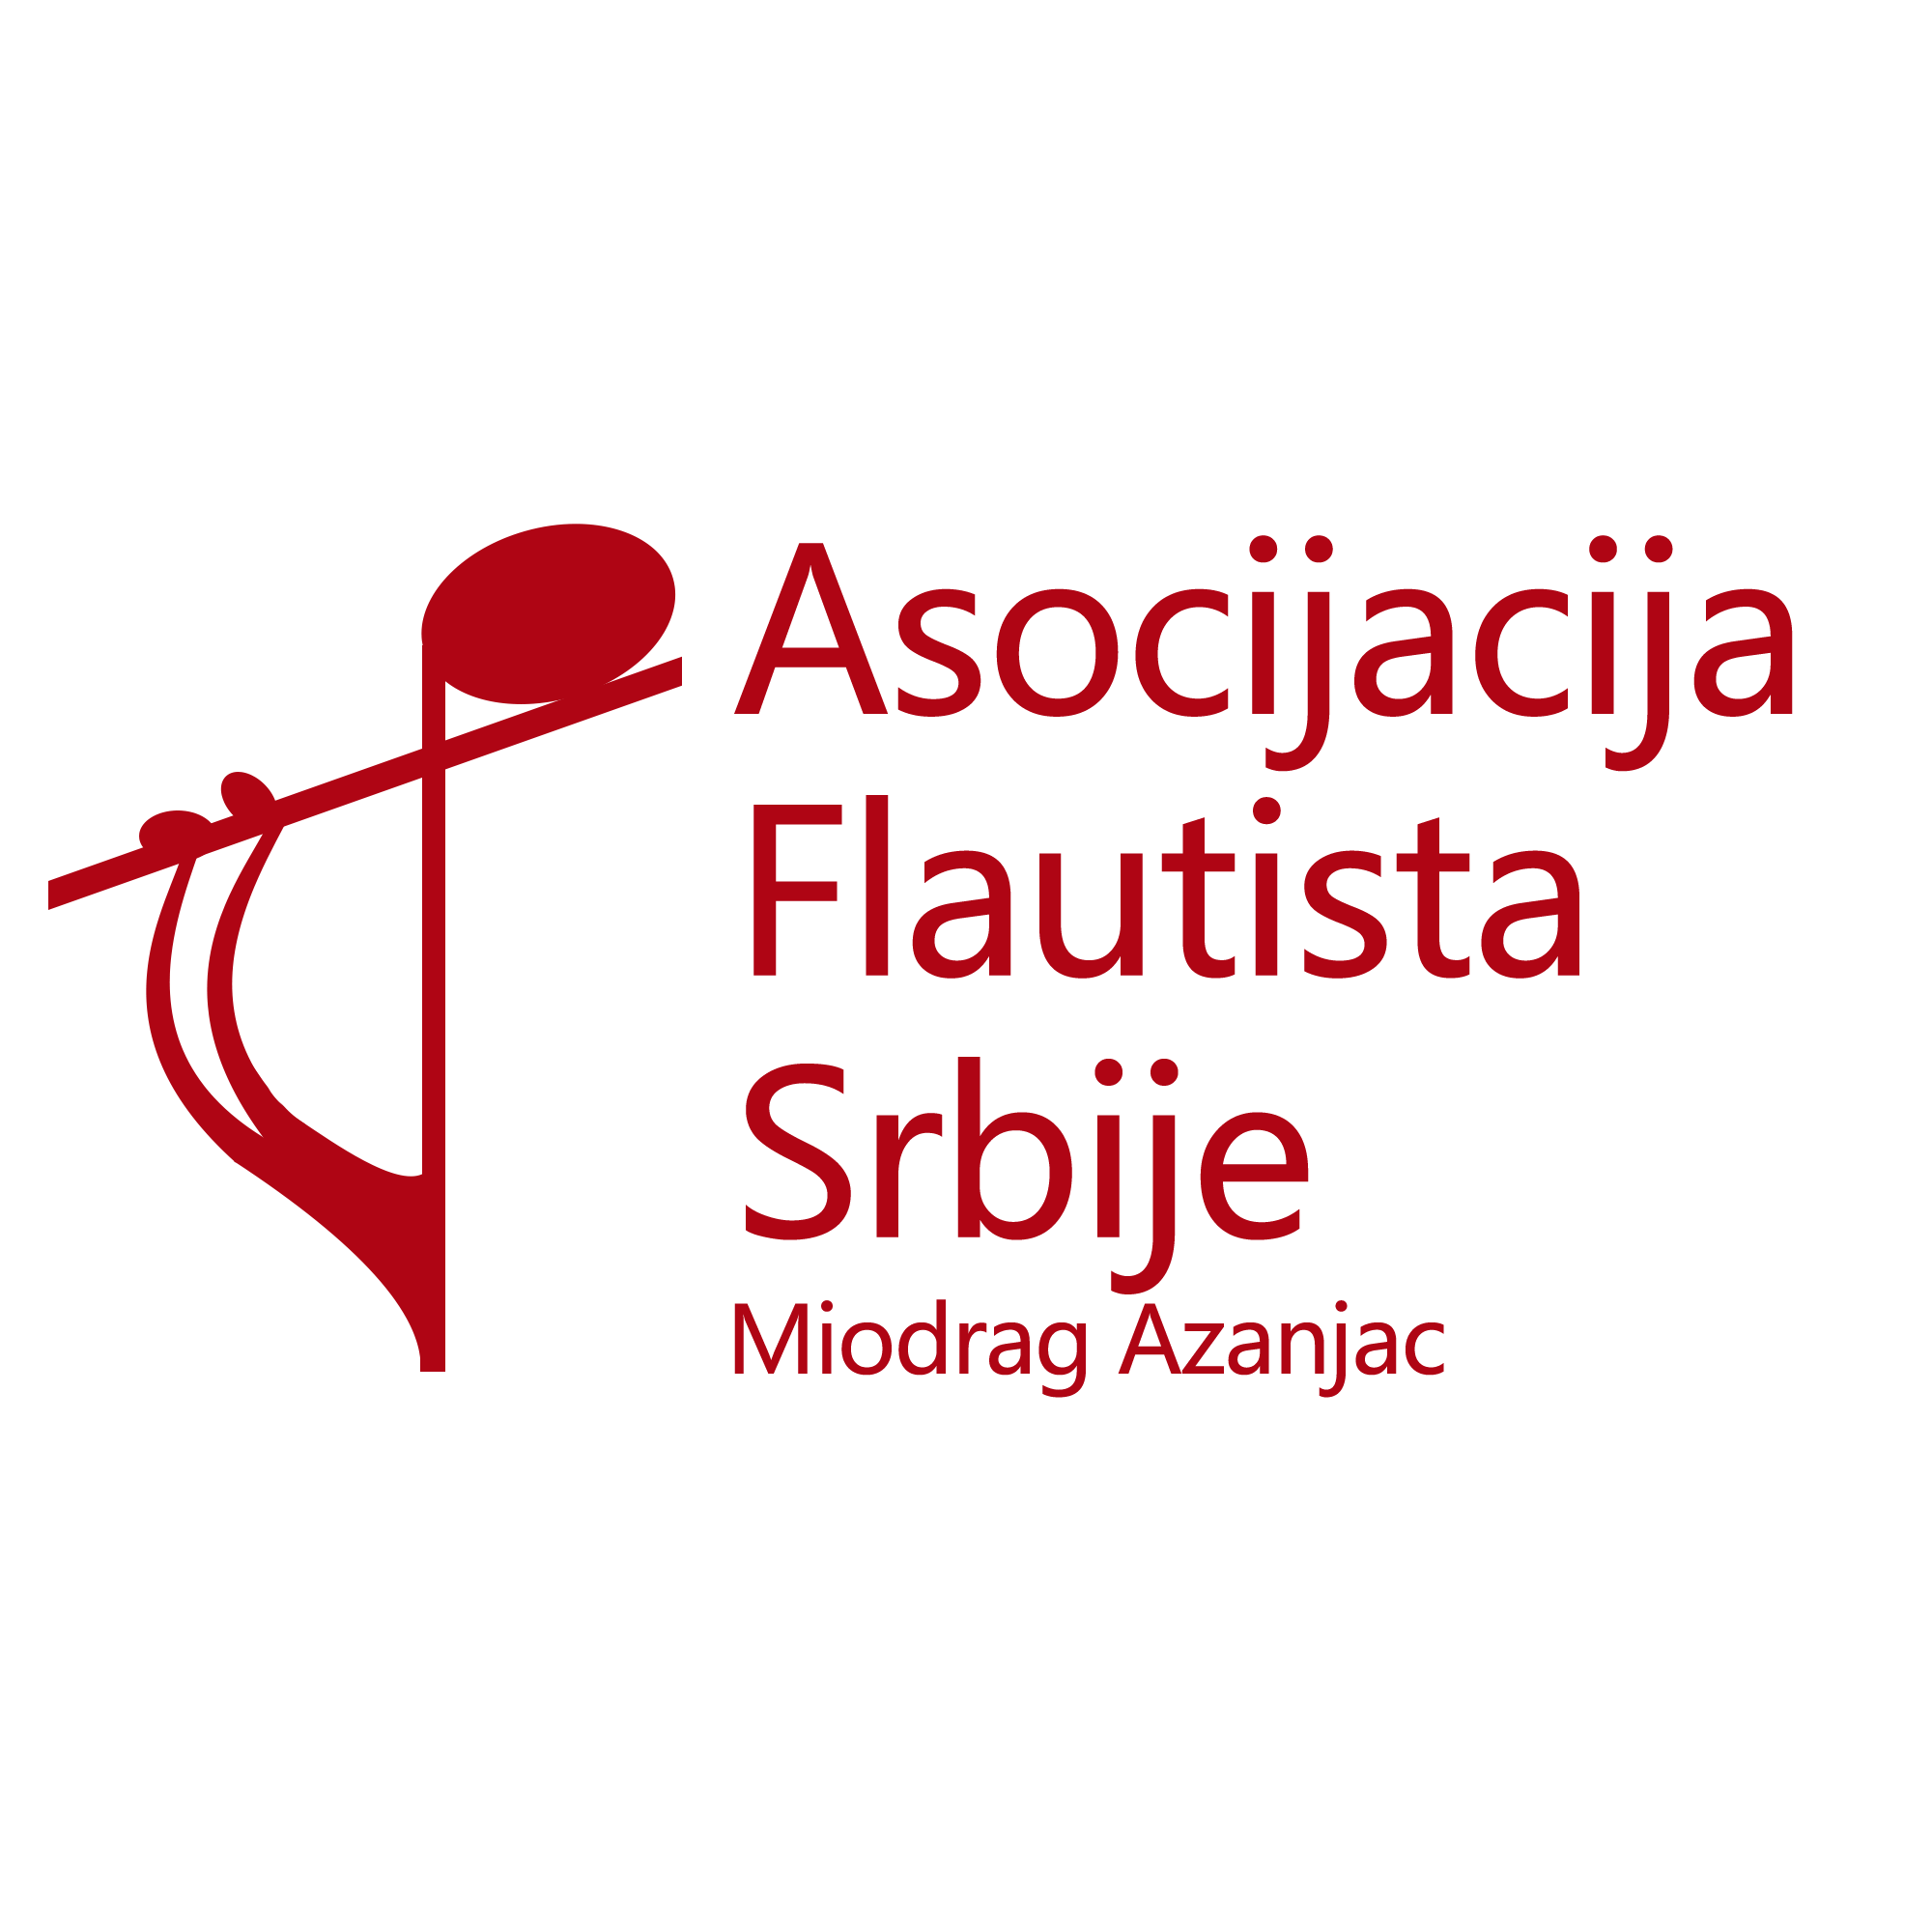 Asocijacija Flautista Srbije logo remake